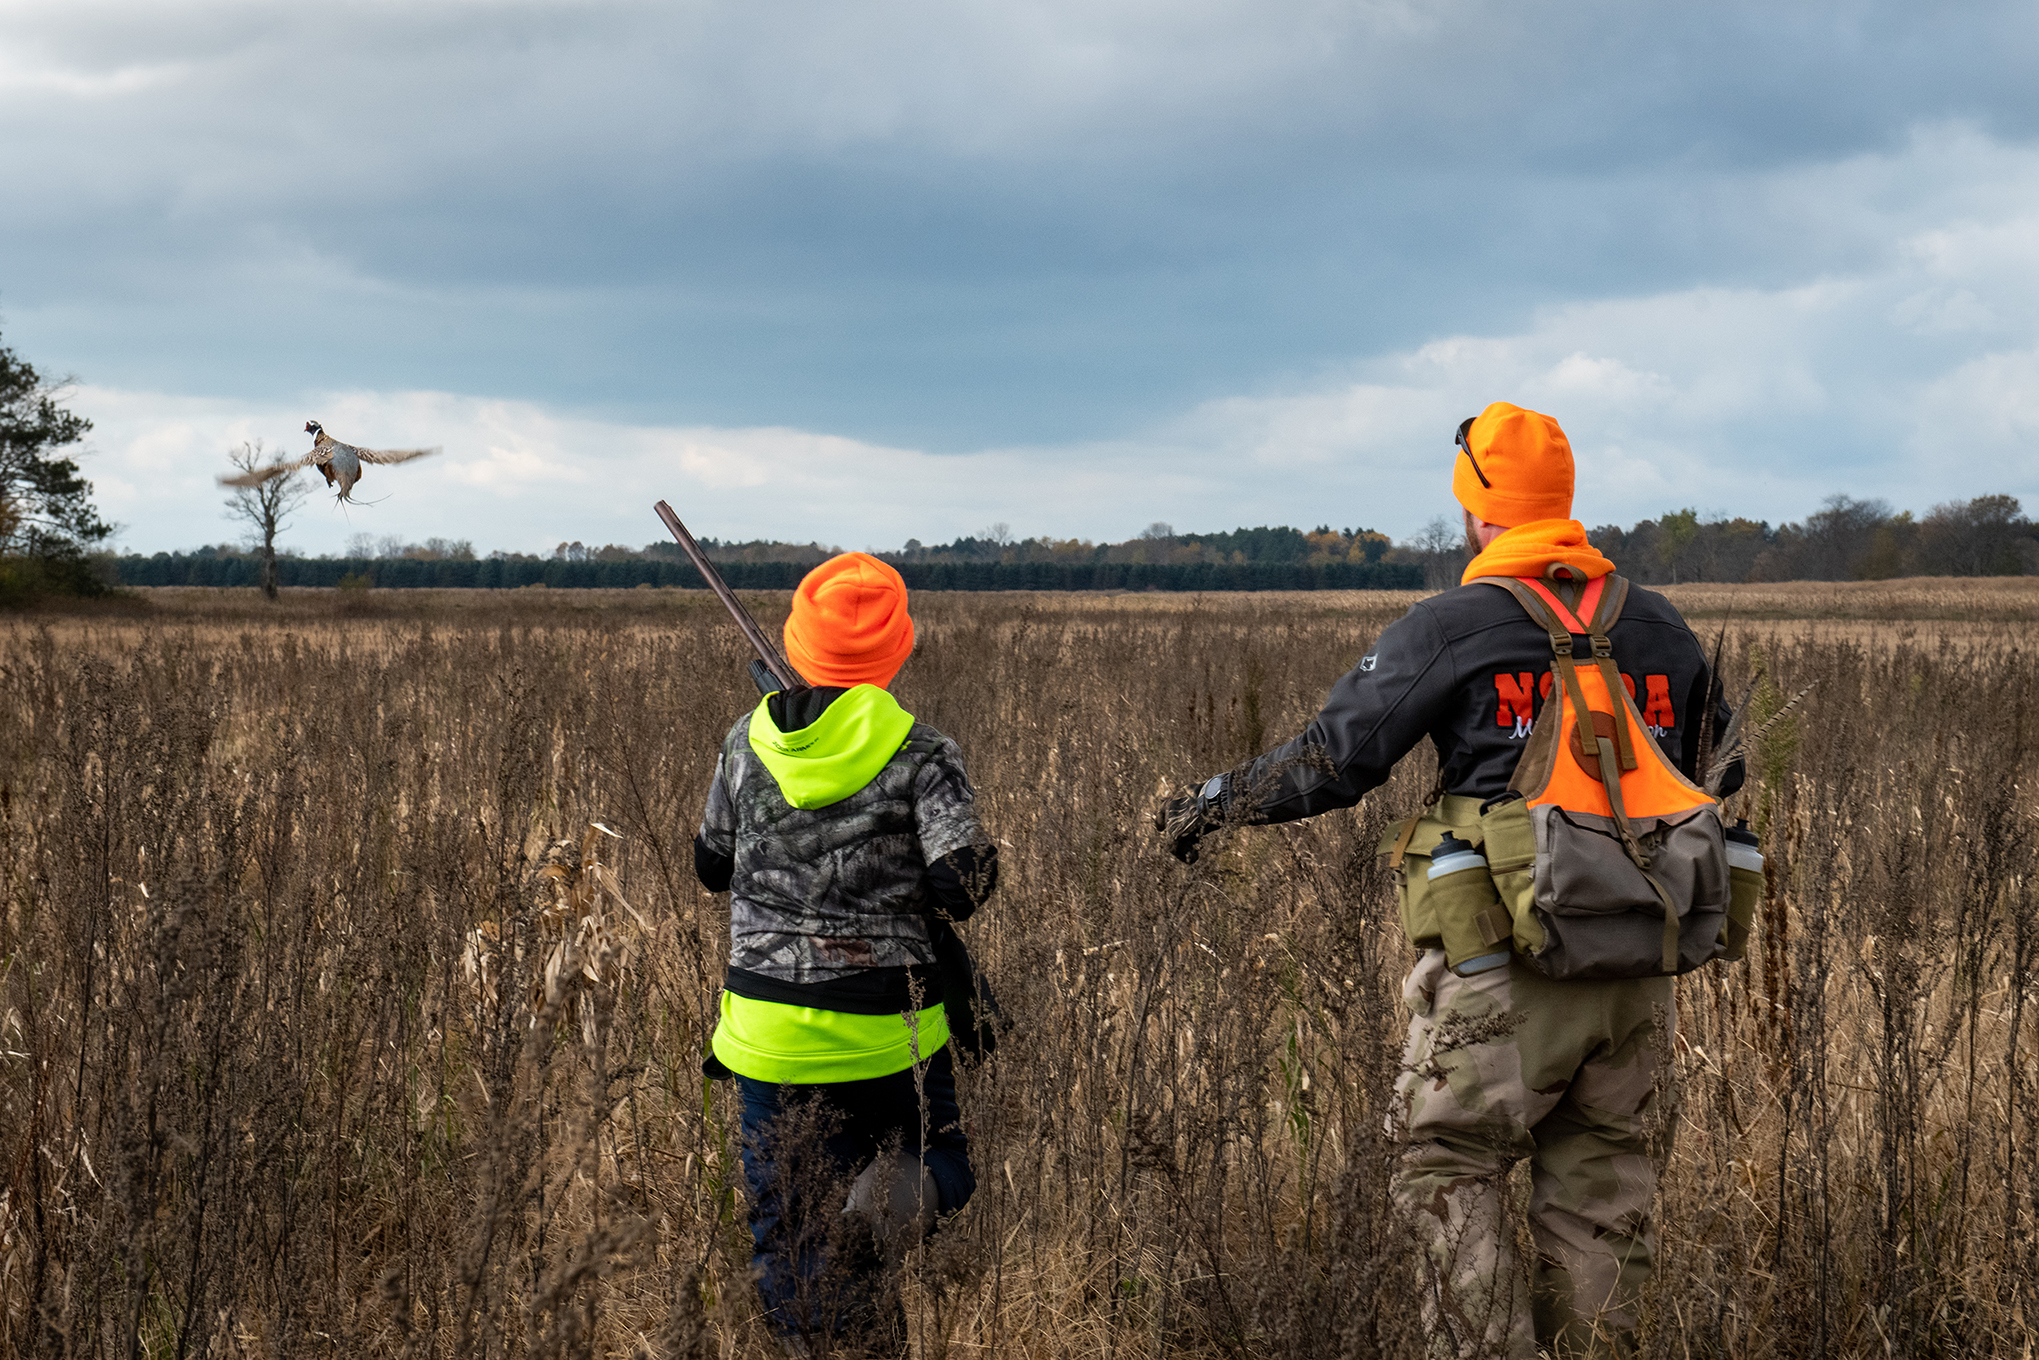 Pheasant hunt still provides unique experience